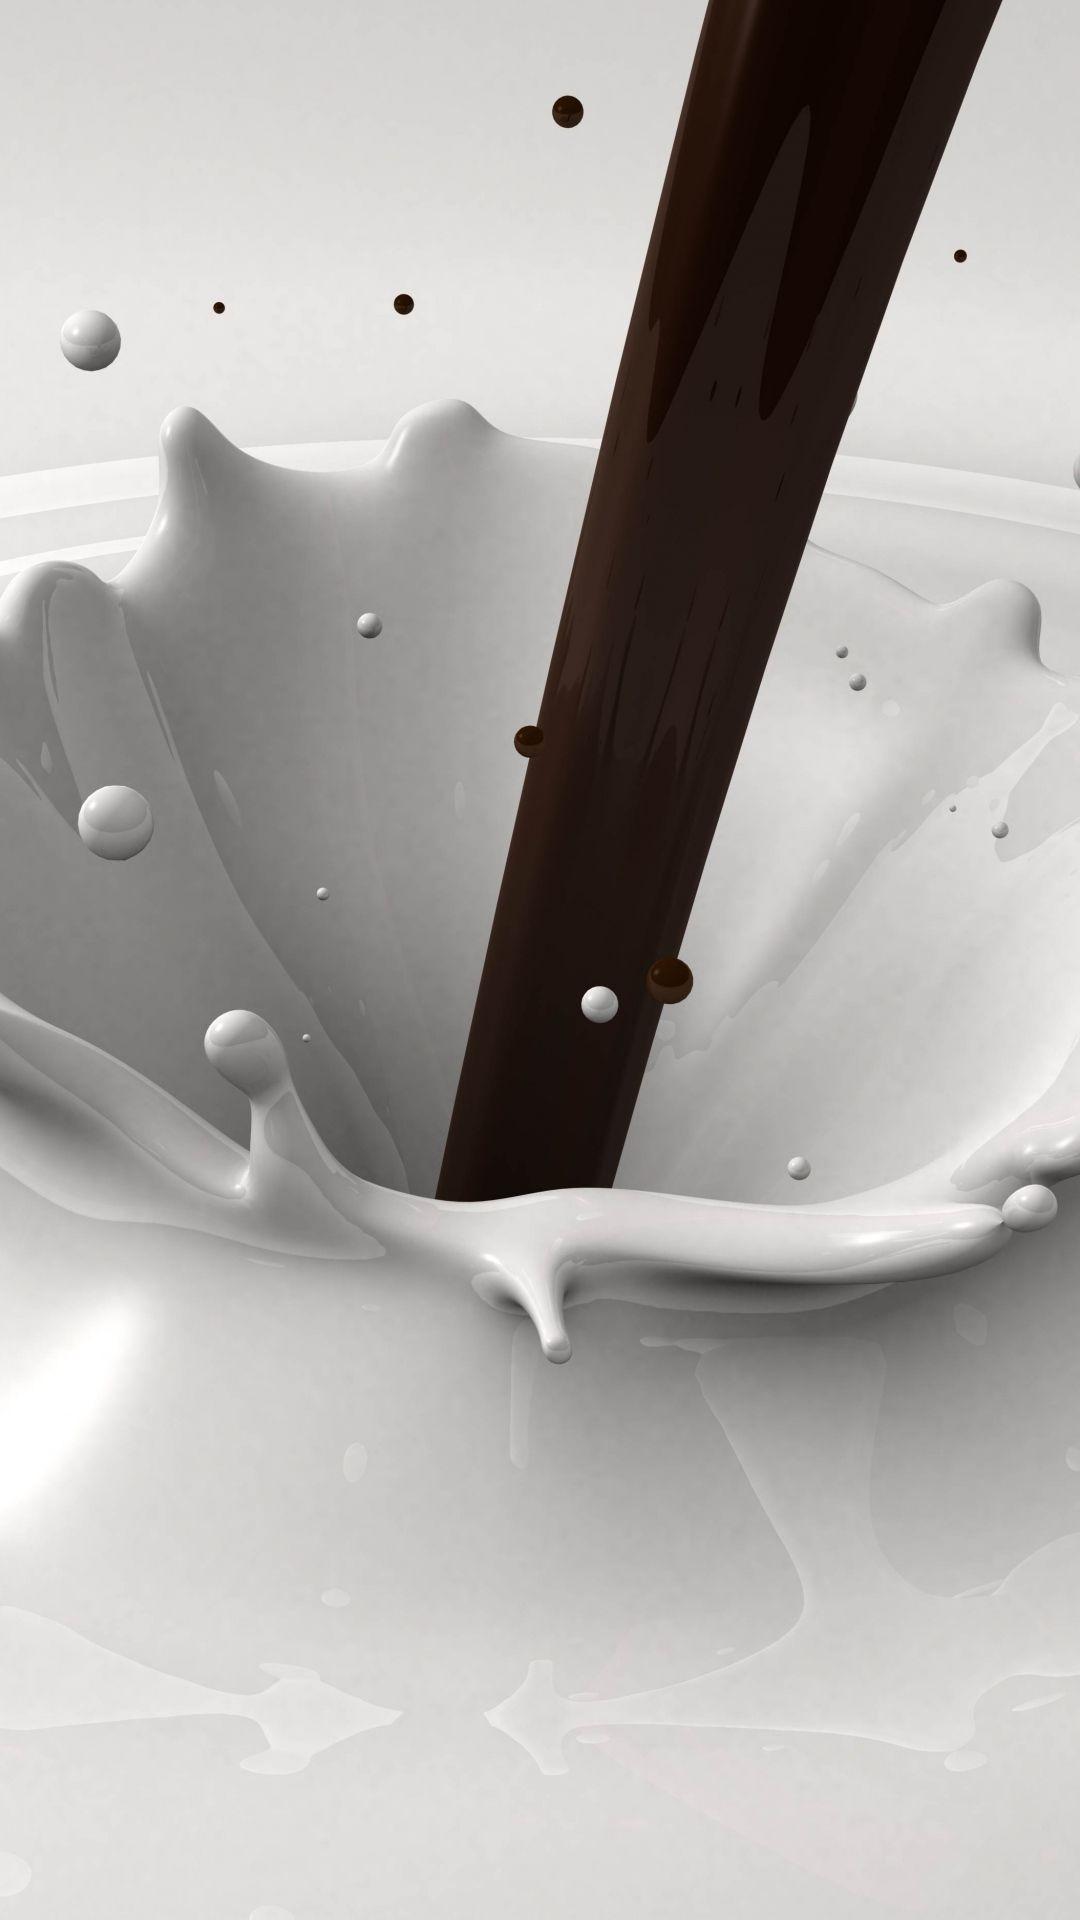 Chocolate Milk Splash 3D Art #iPhone #plus #wallpaper. iPhone 6